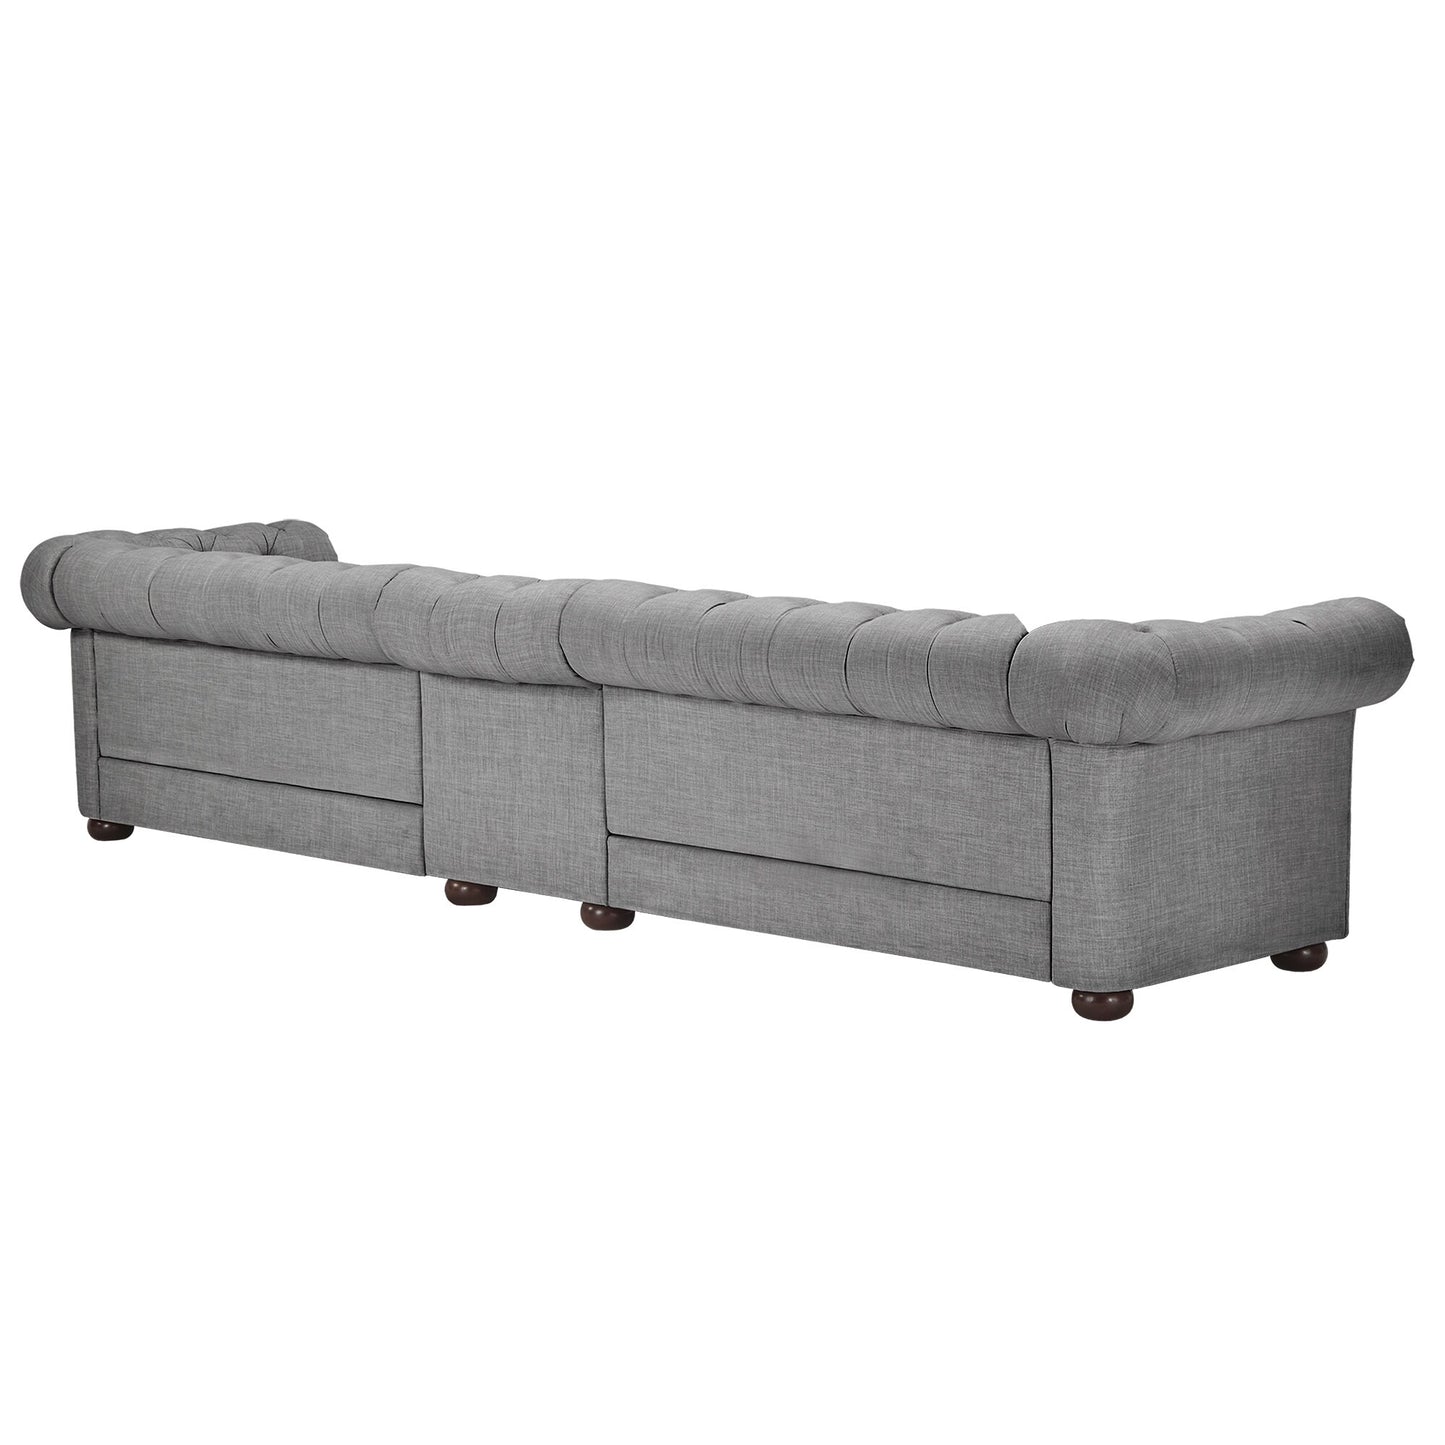 5-Seat Modular Chesterfield Sofa - Gray Linen